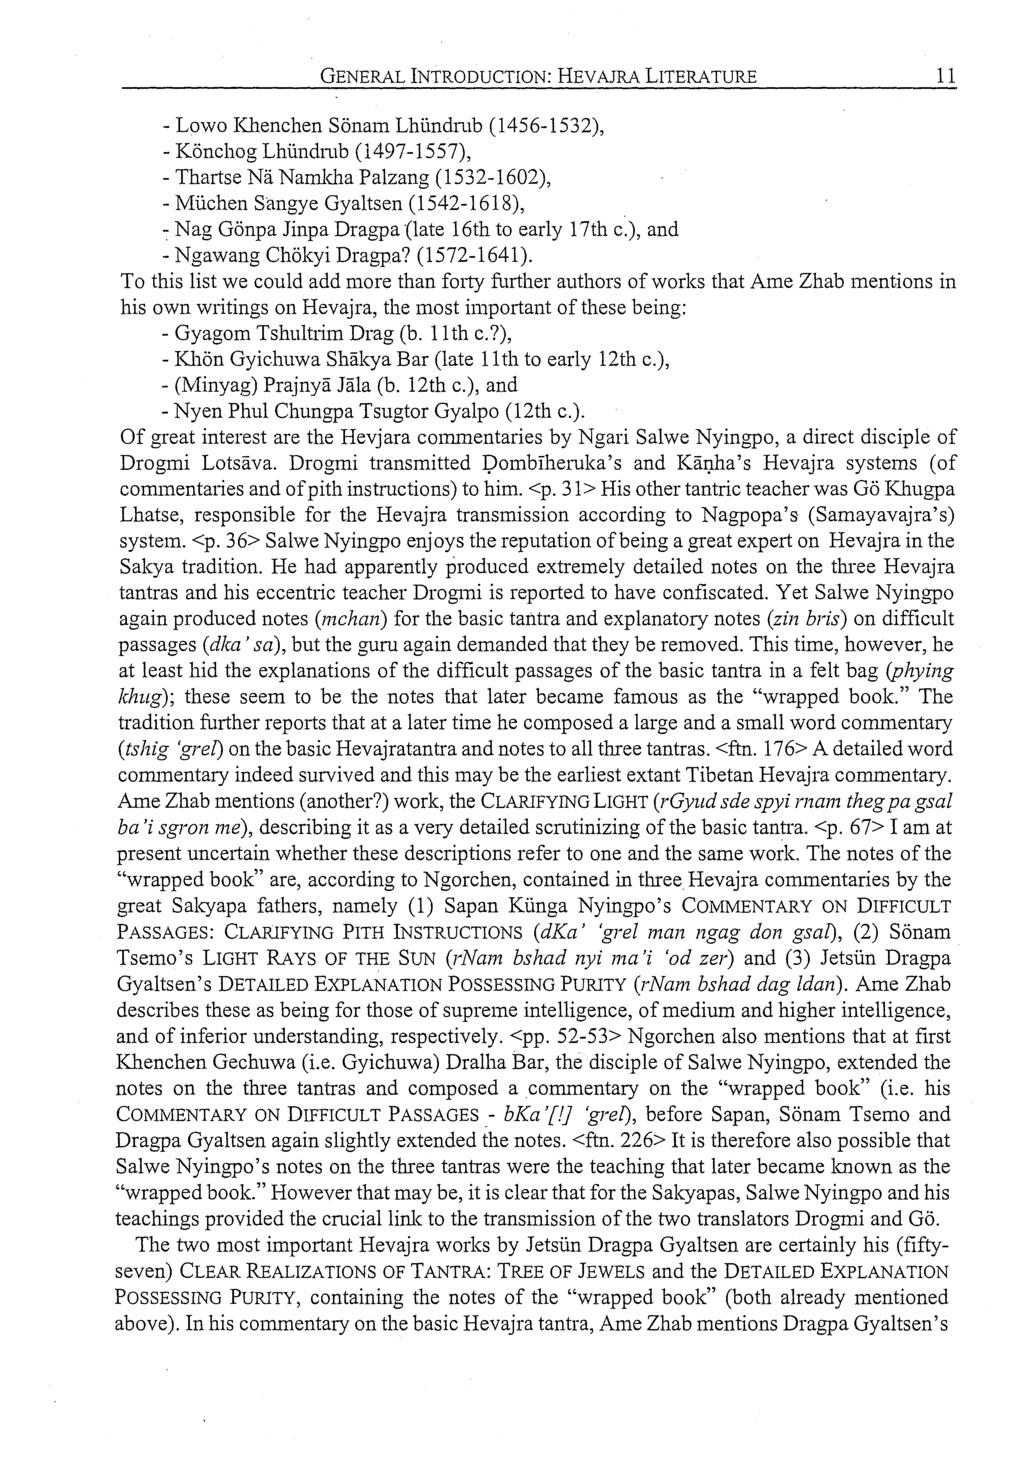 GENERAL INTRODUCTION: HEVAJRA LITERATURE 11 - Lowo Khenchen Sonam Lhiindmb (1456-1532), - Konchog Lhiindrub (1497-1557), - Thartse Nii Namldla Palzang (1532-1602), - Miichen Sangye Gyaltsen